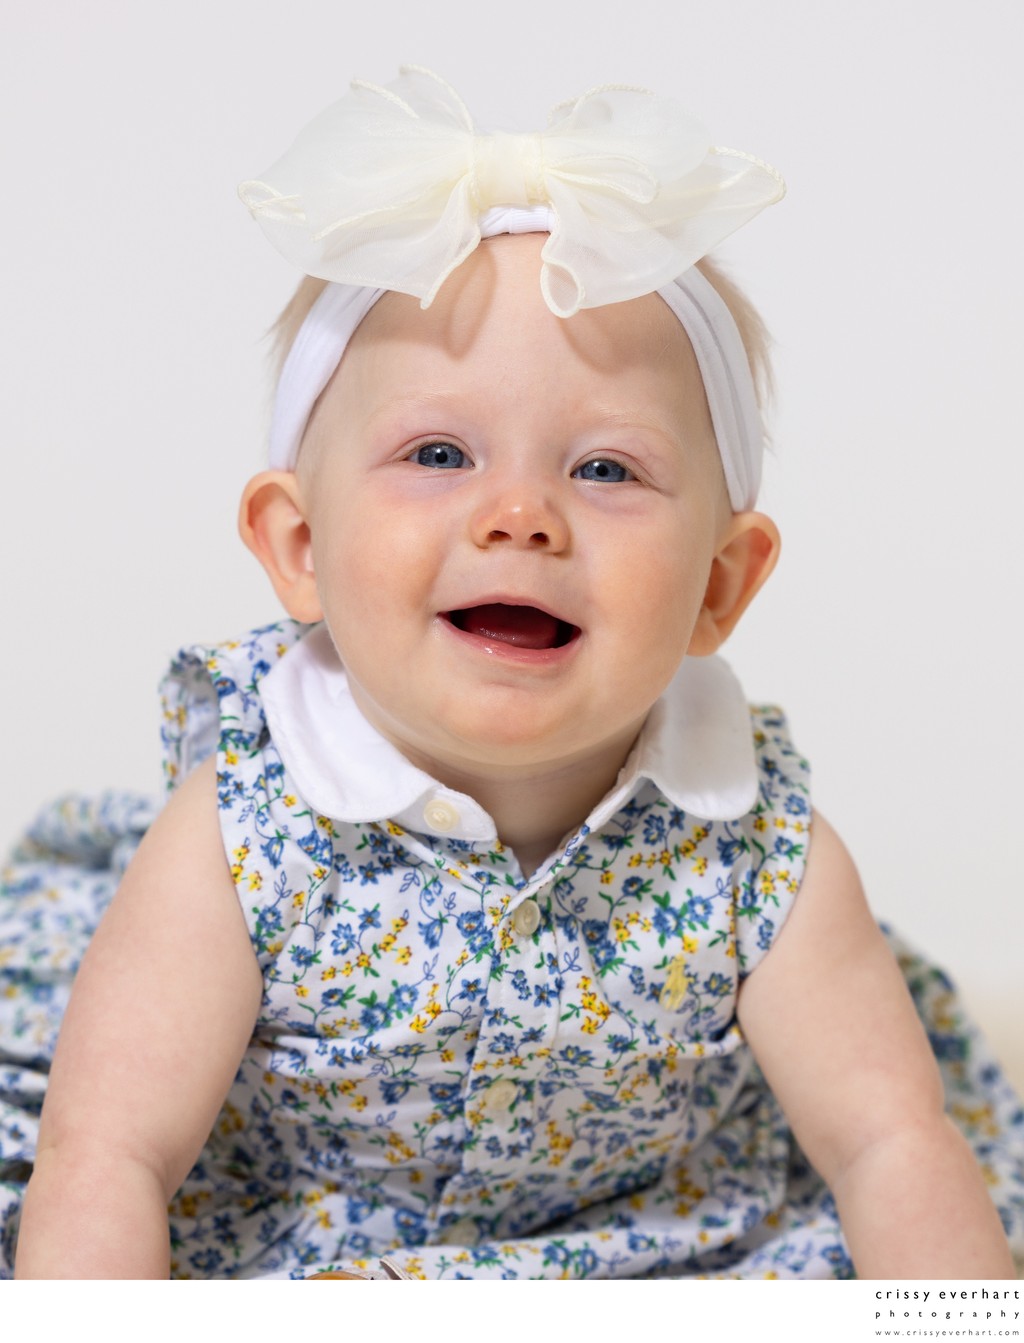 Preschool Photos for Babies